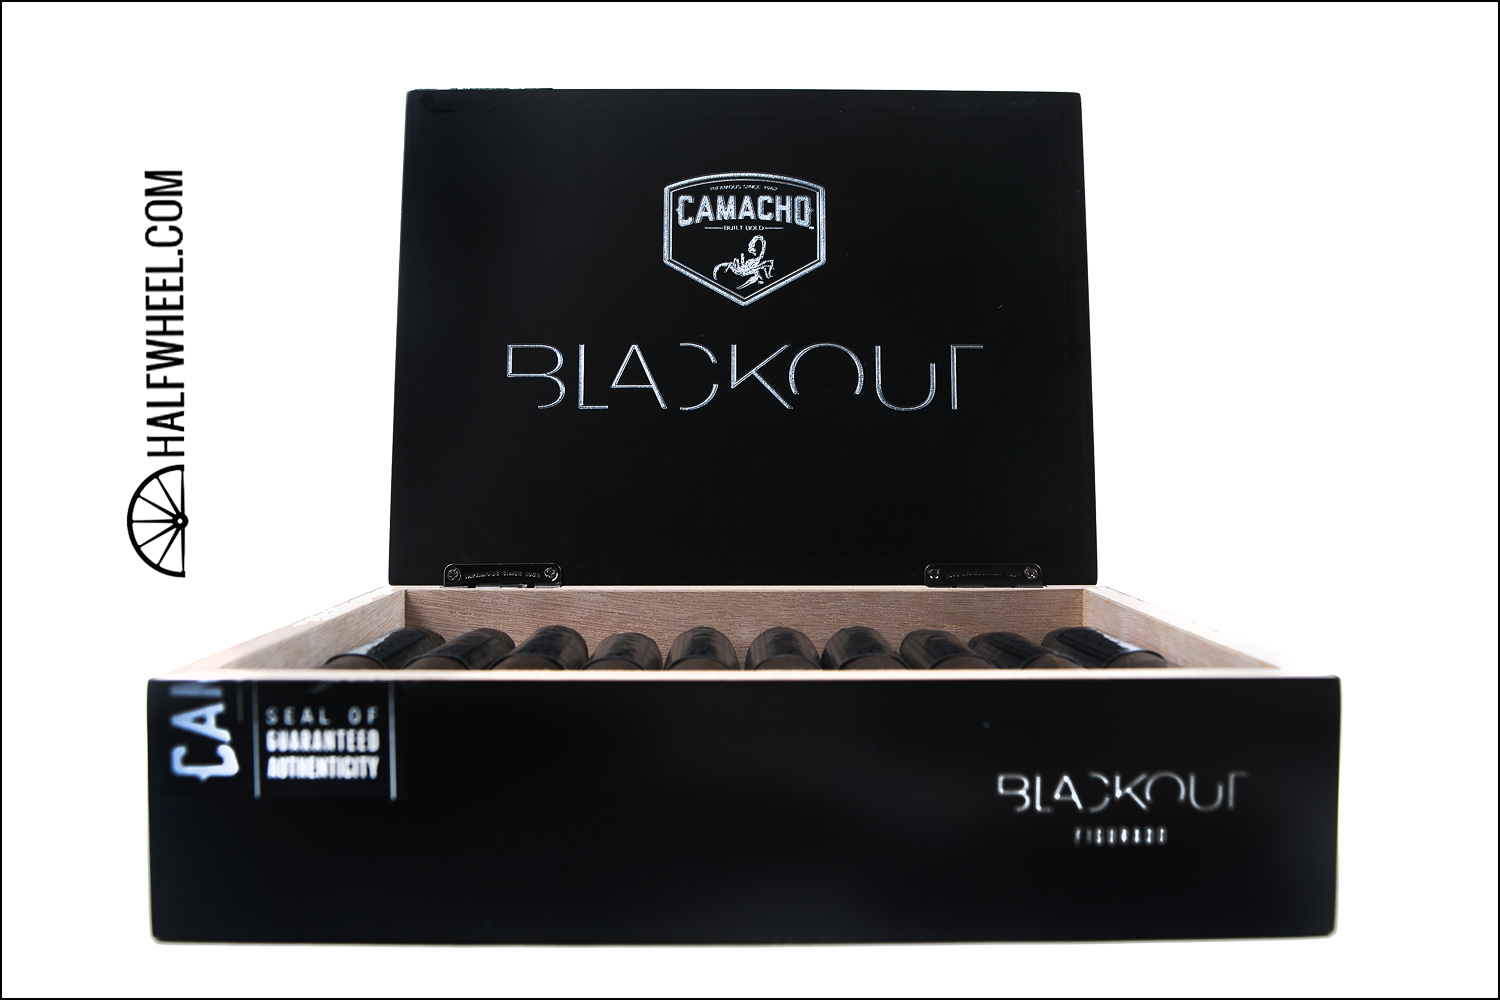 Camacho Blackout Limited Edition 2013 Box 3